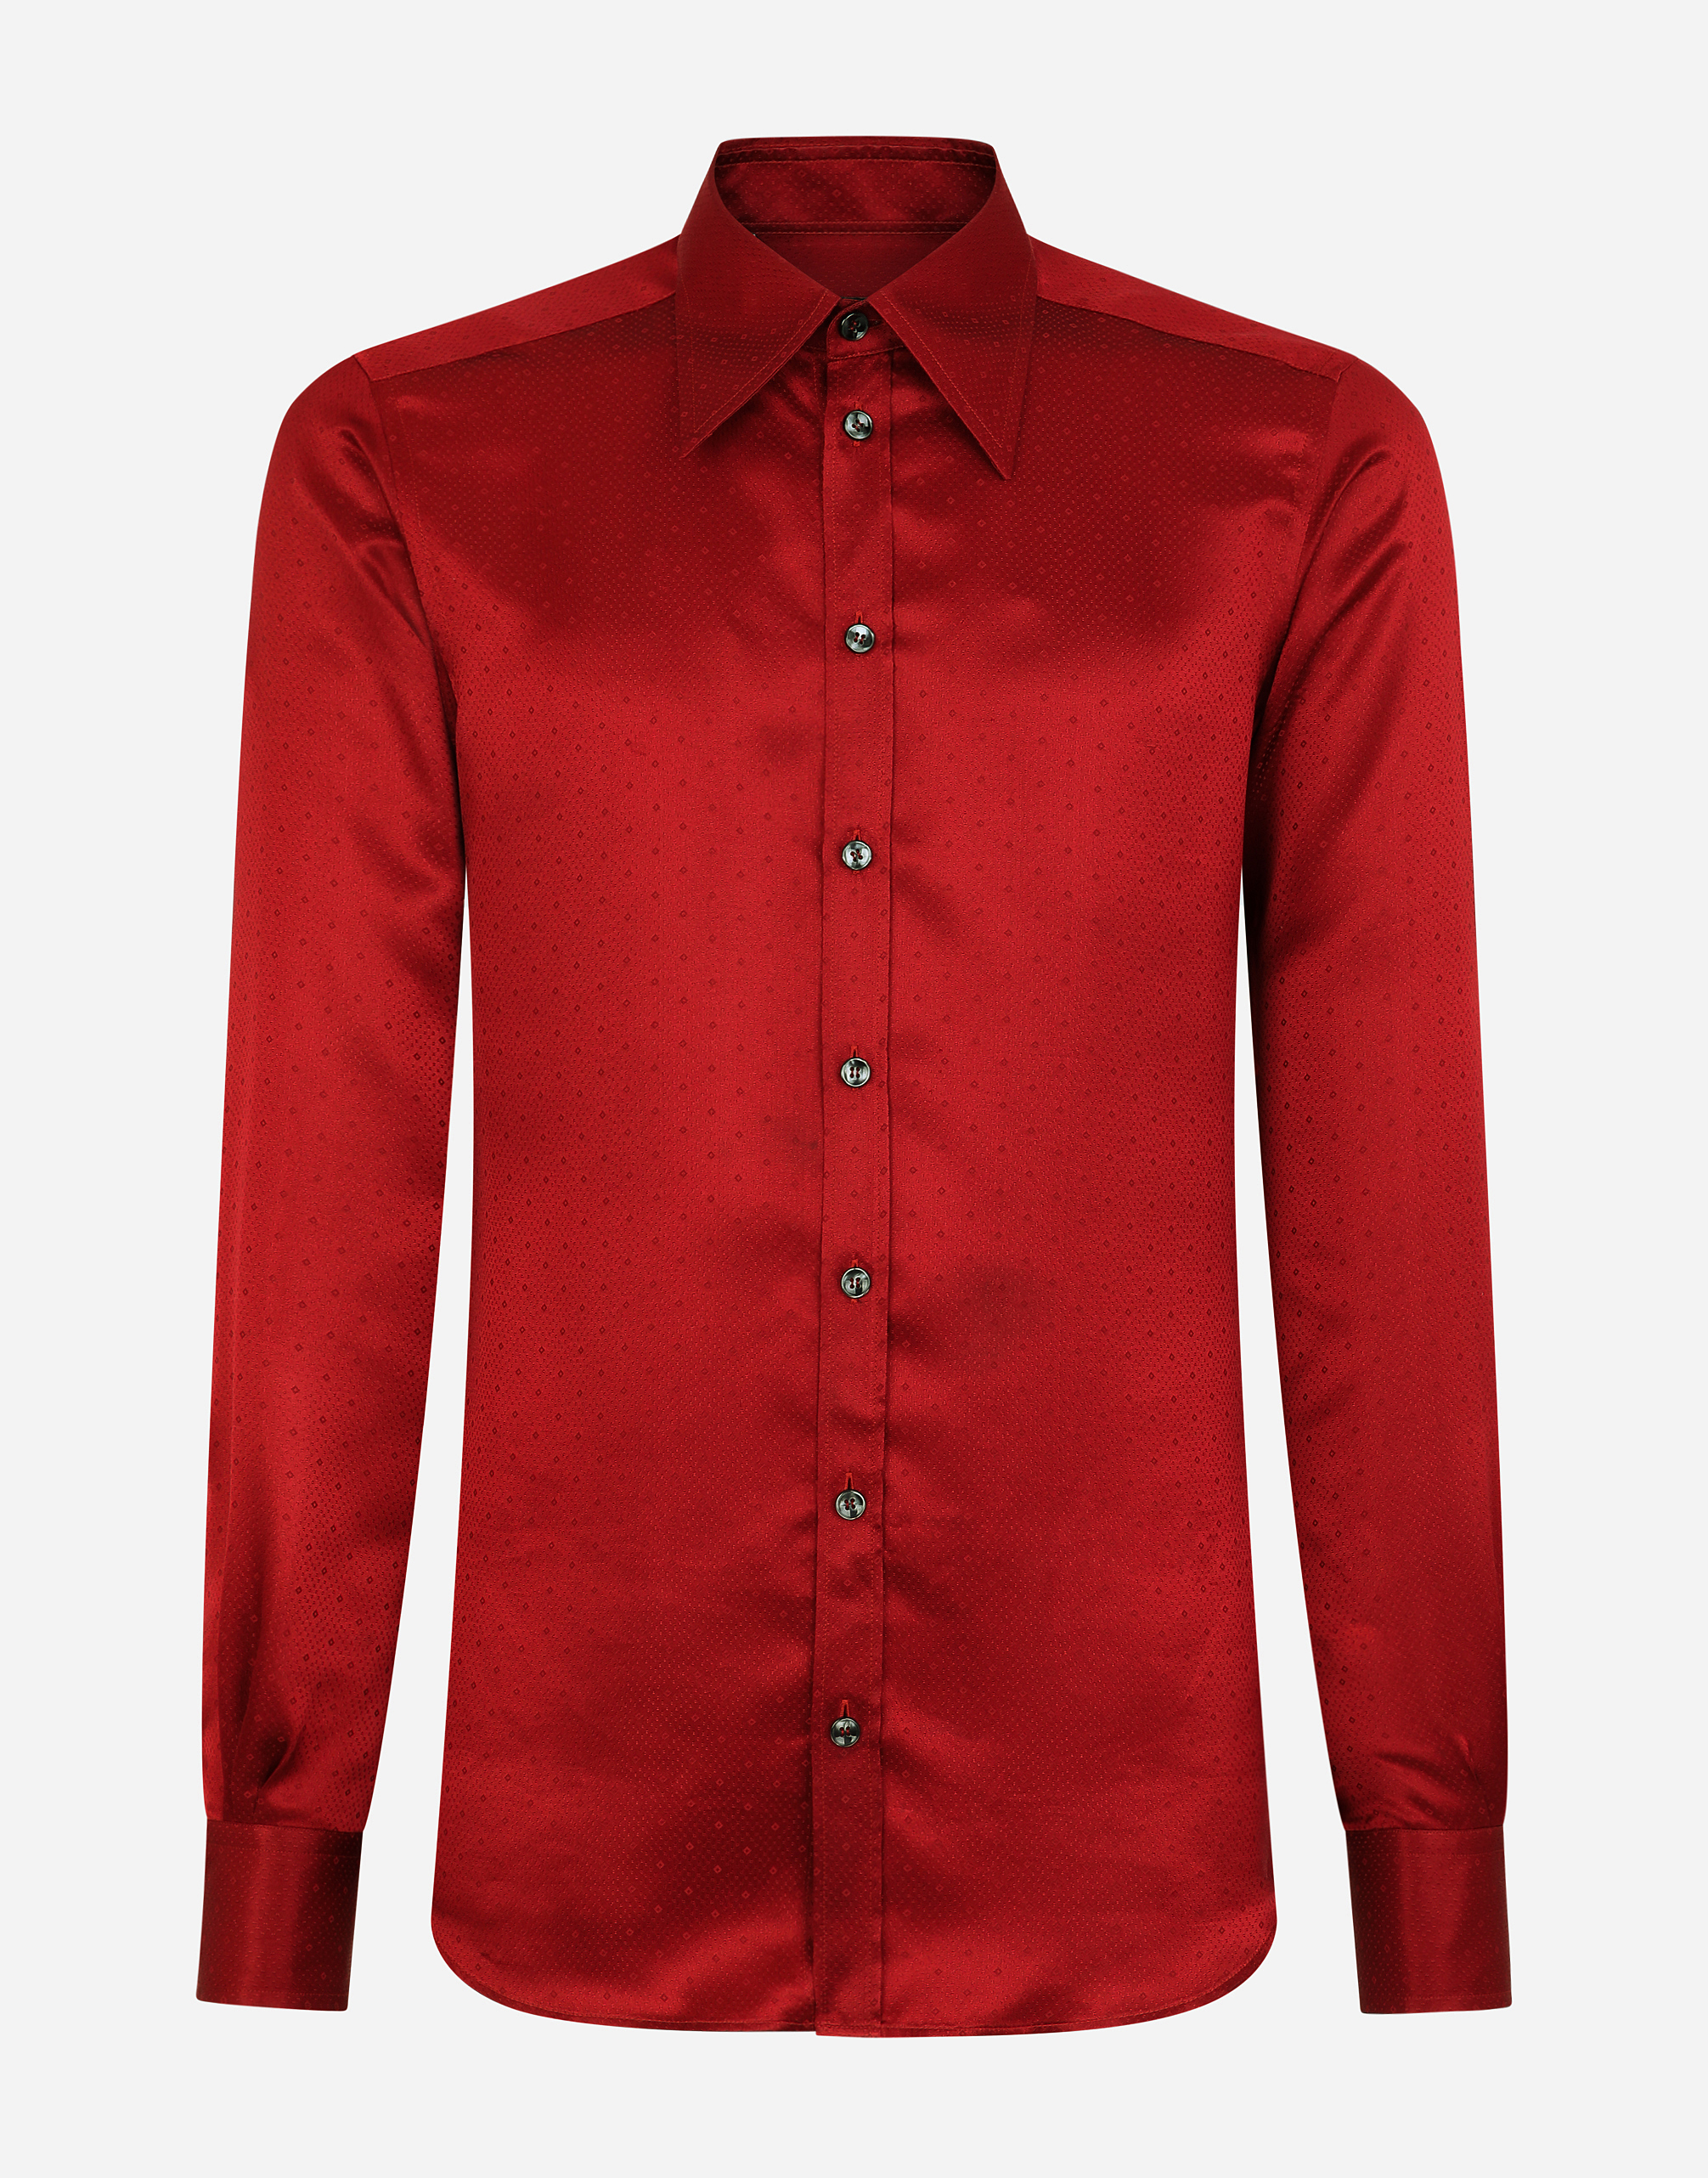 Martini silk jacquard shirt in Red